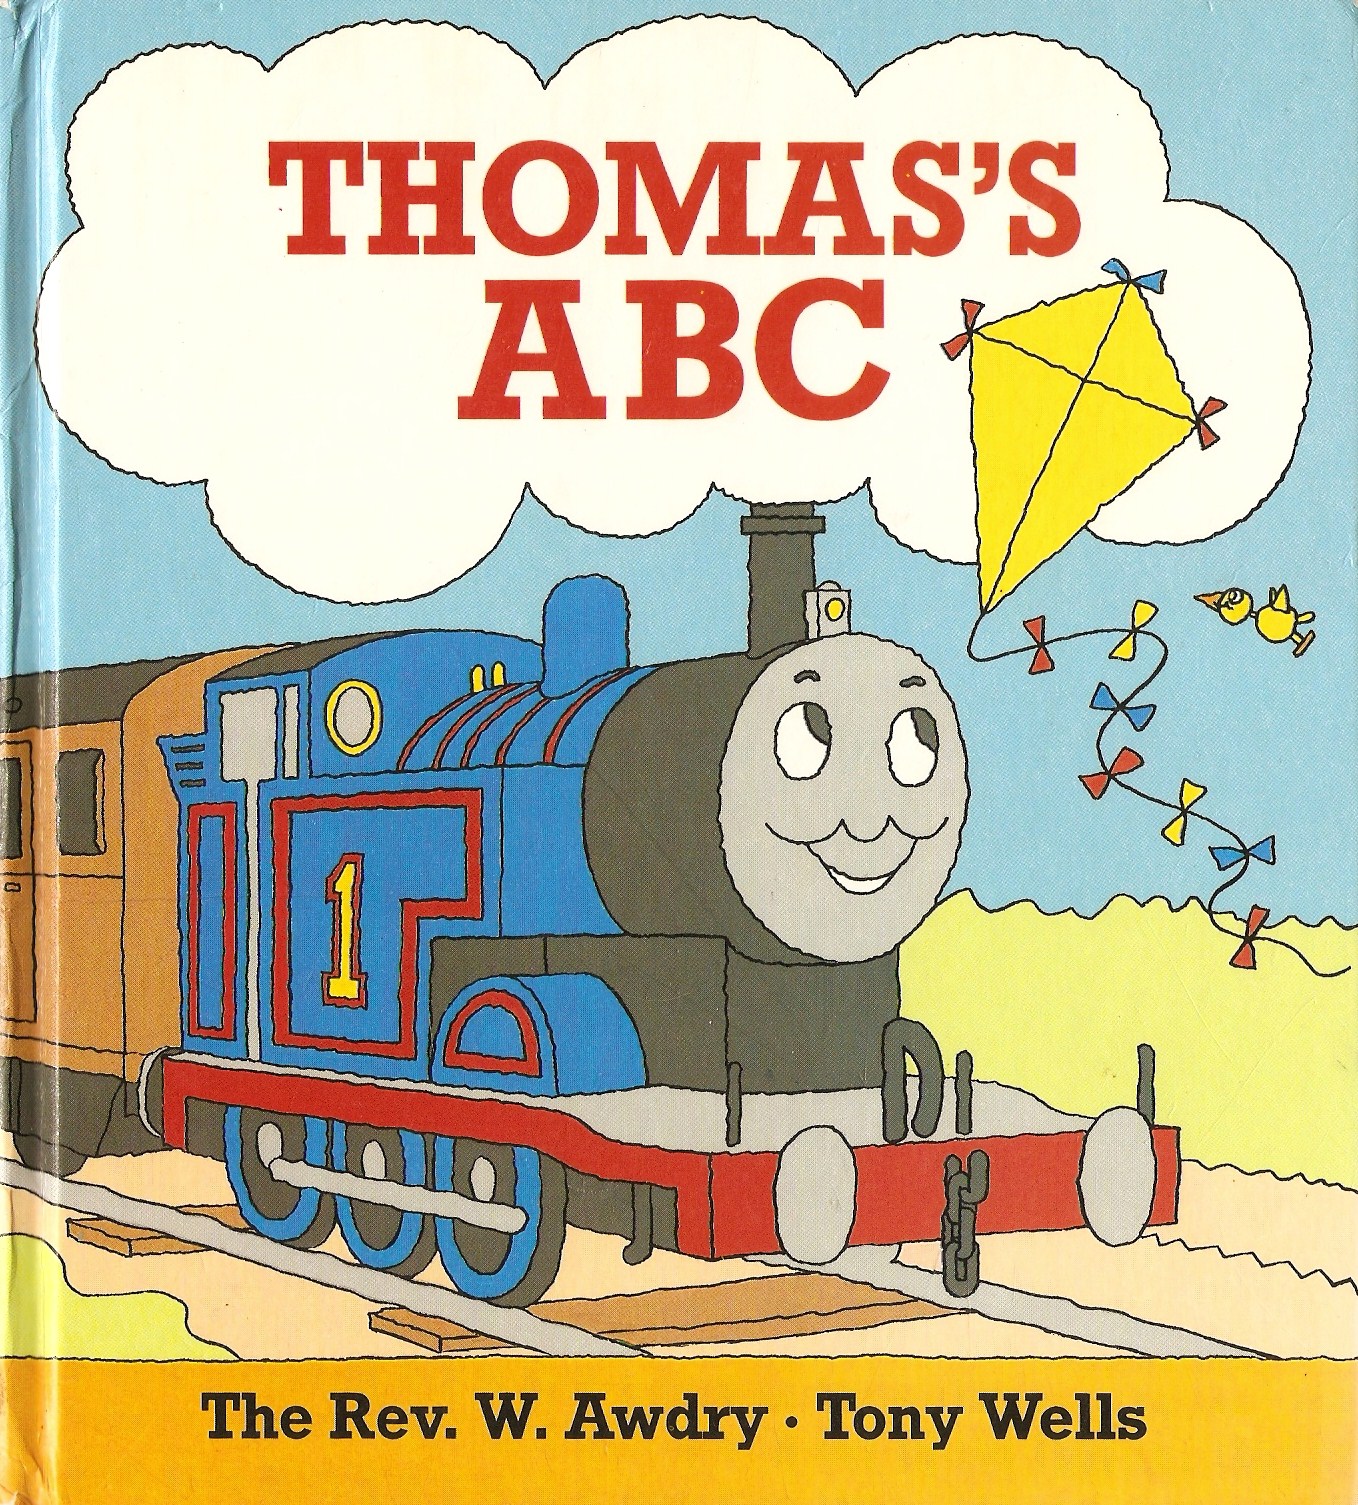 abc thomas the train